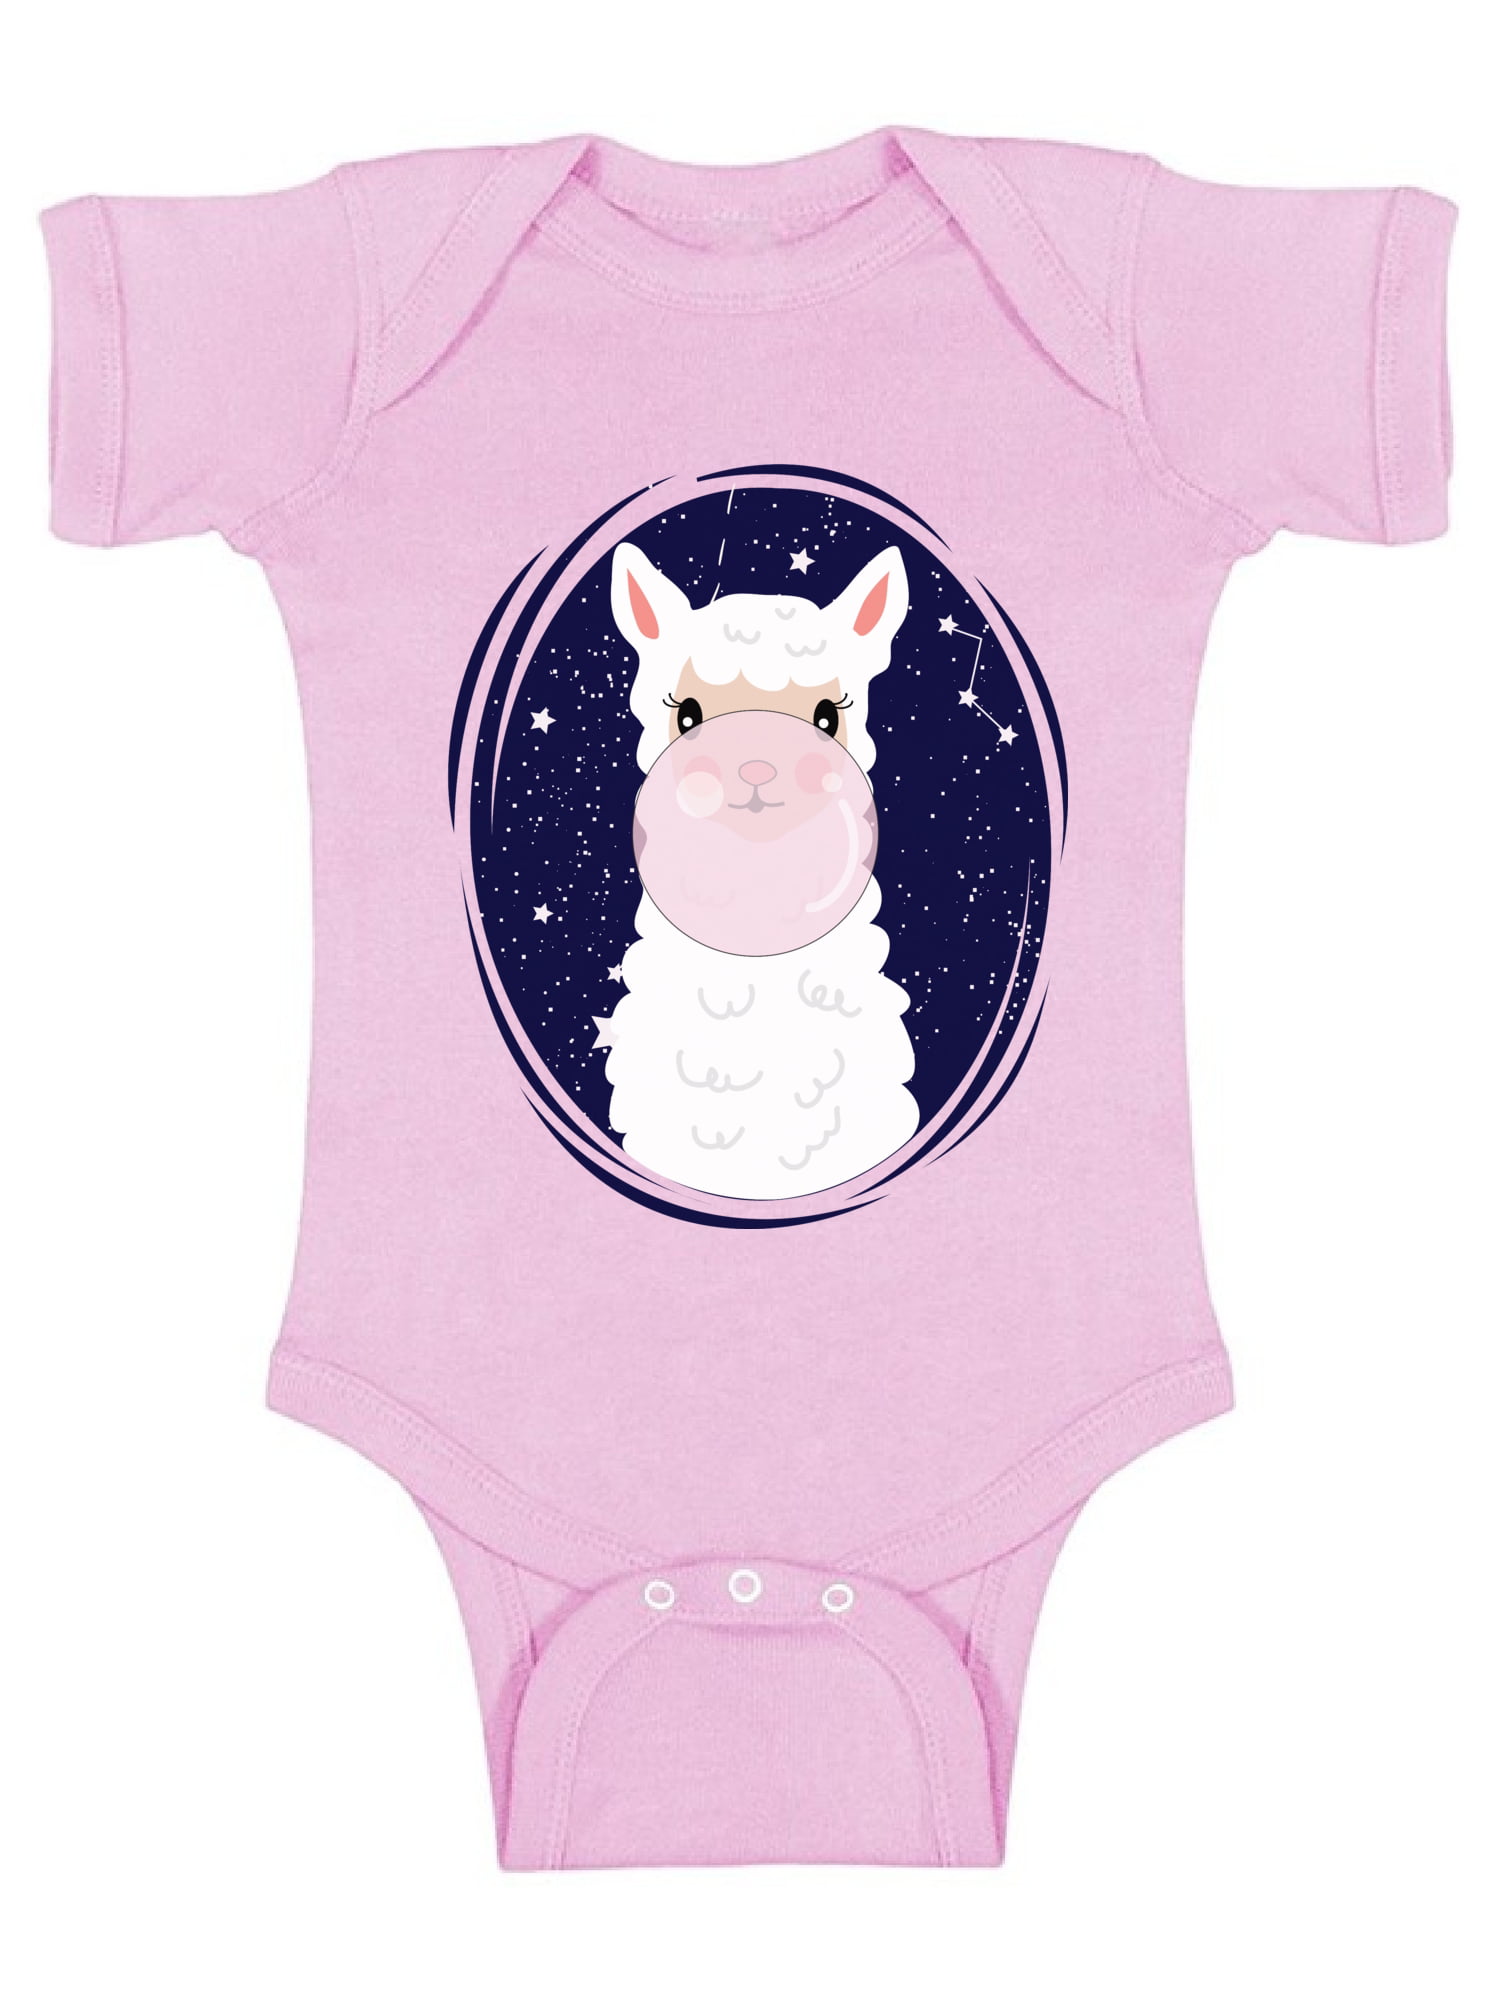 llama baby outfit